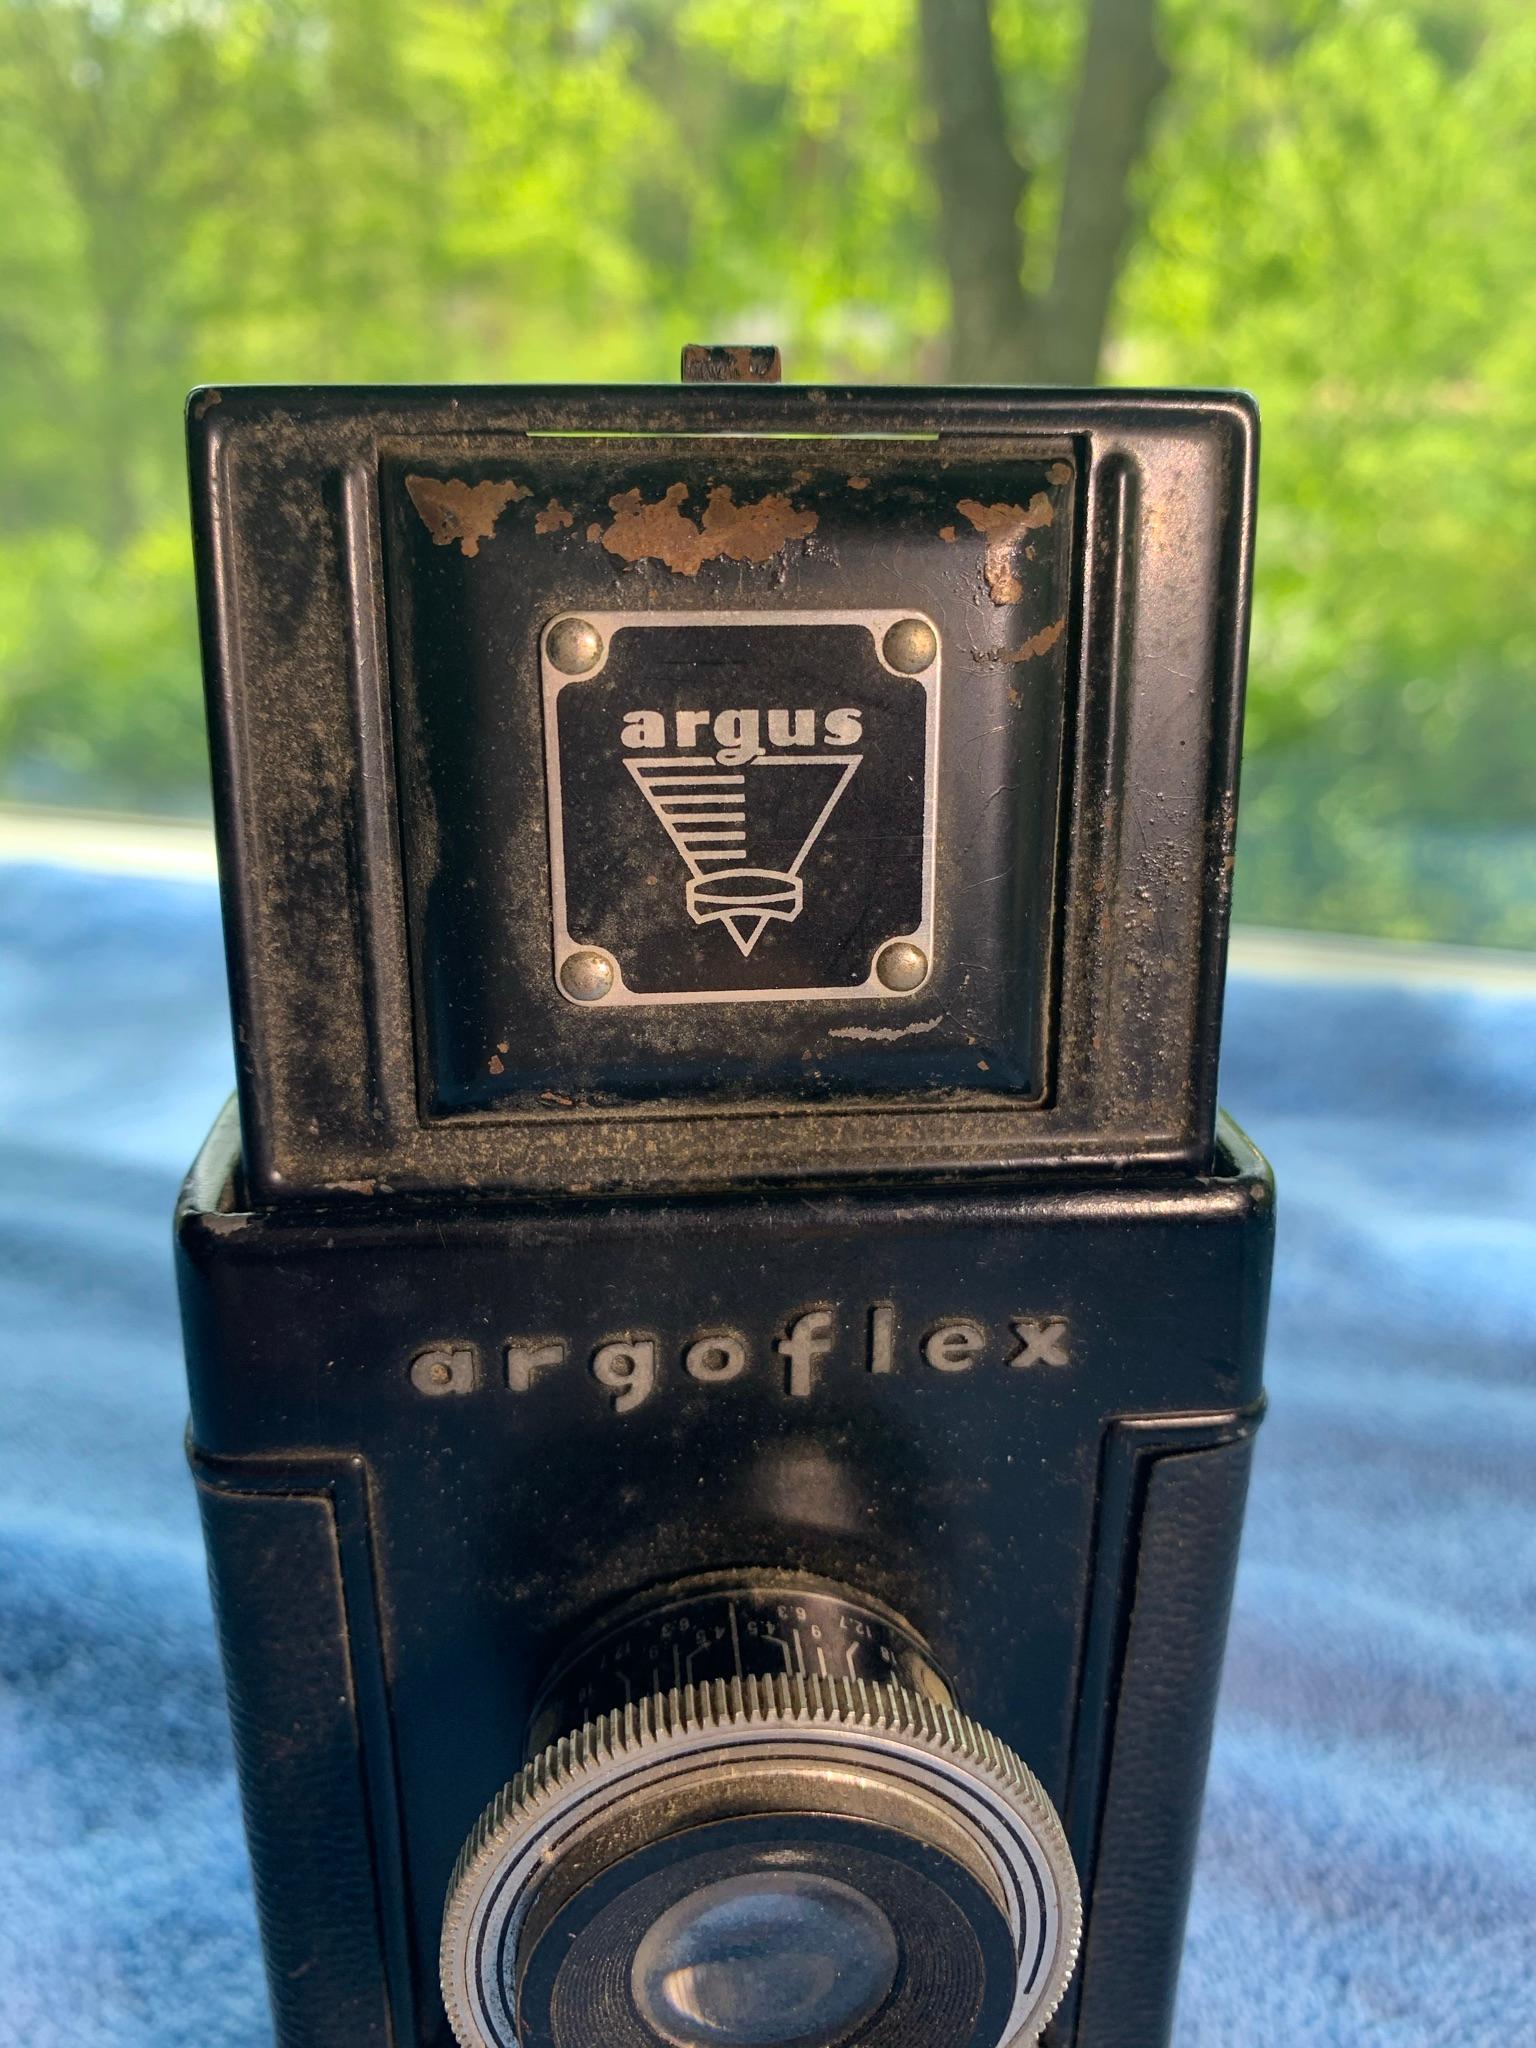 Argus Argoflex Camera